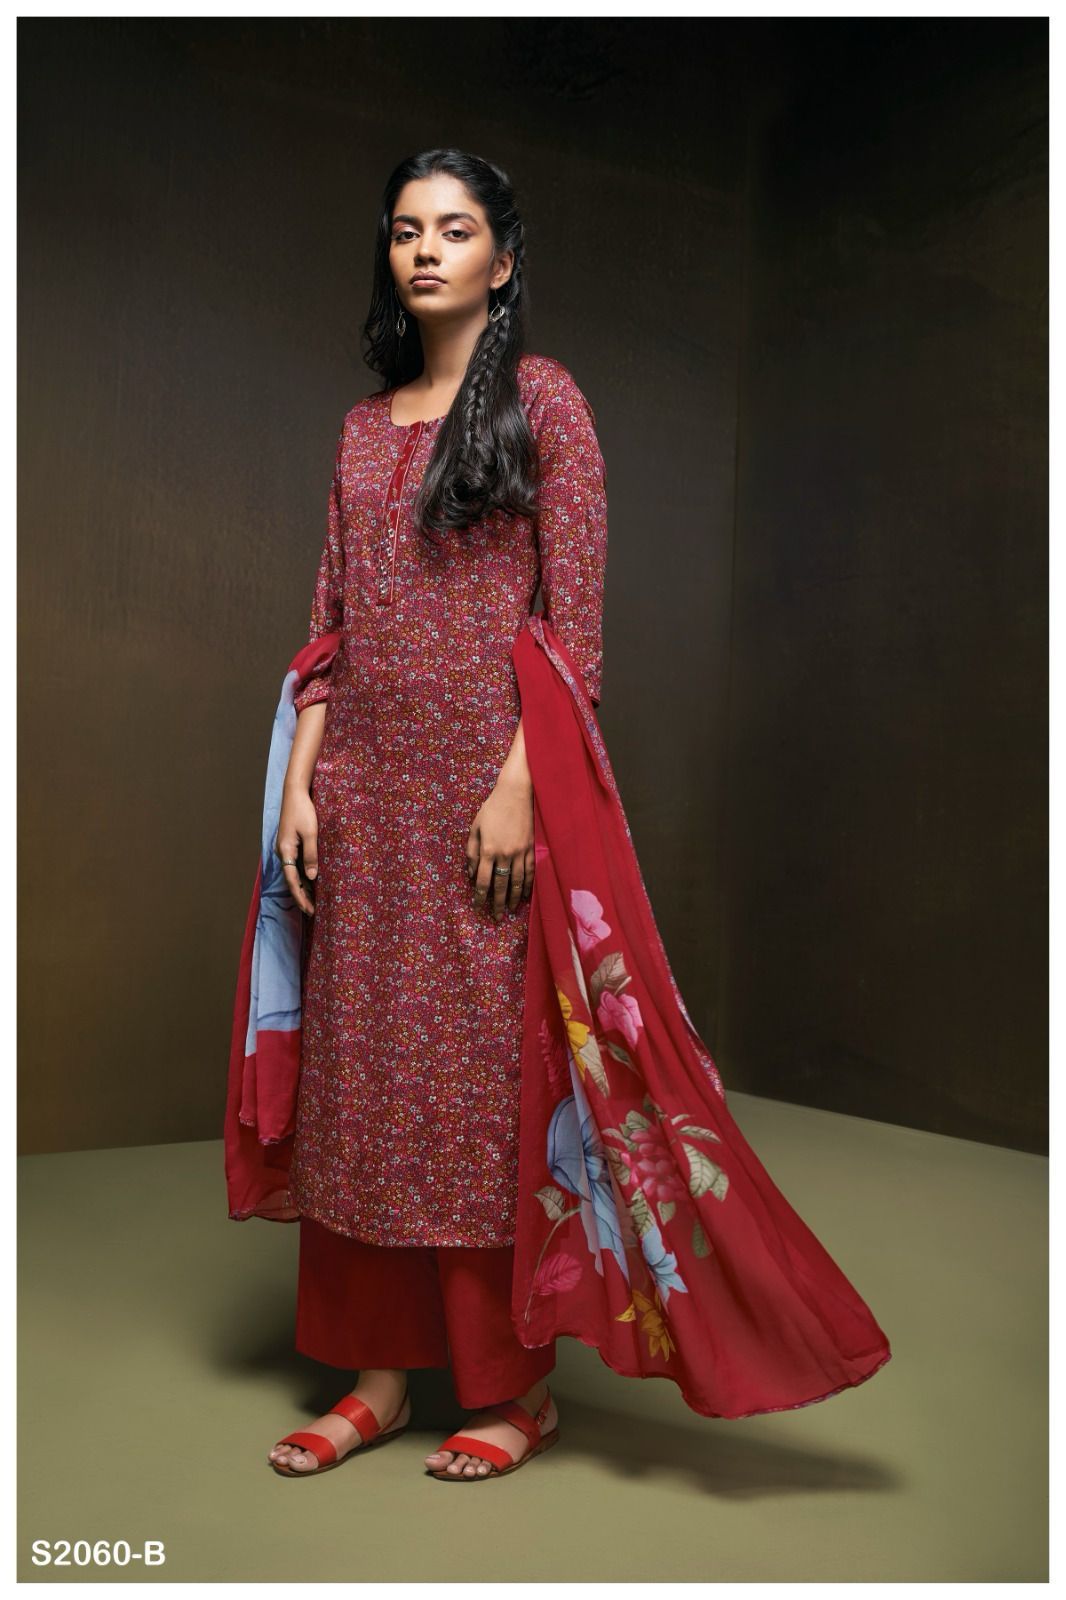 Koa 2060 Ganga Cotton Satin Plazzo Style Suits